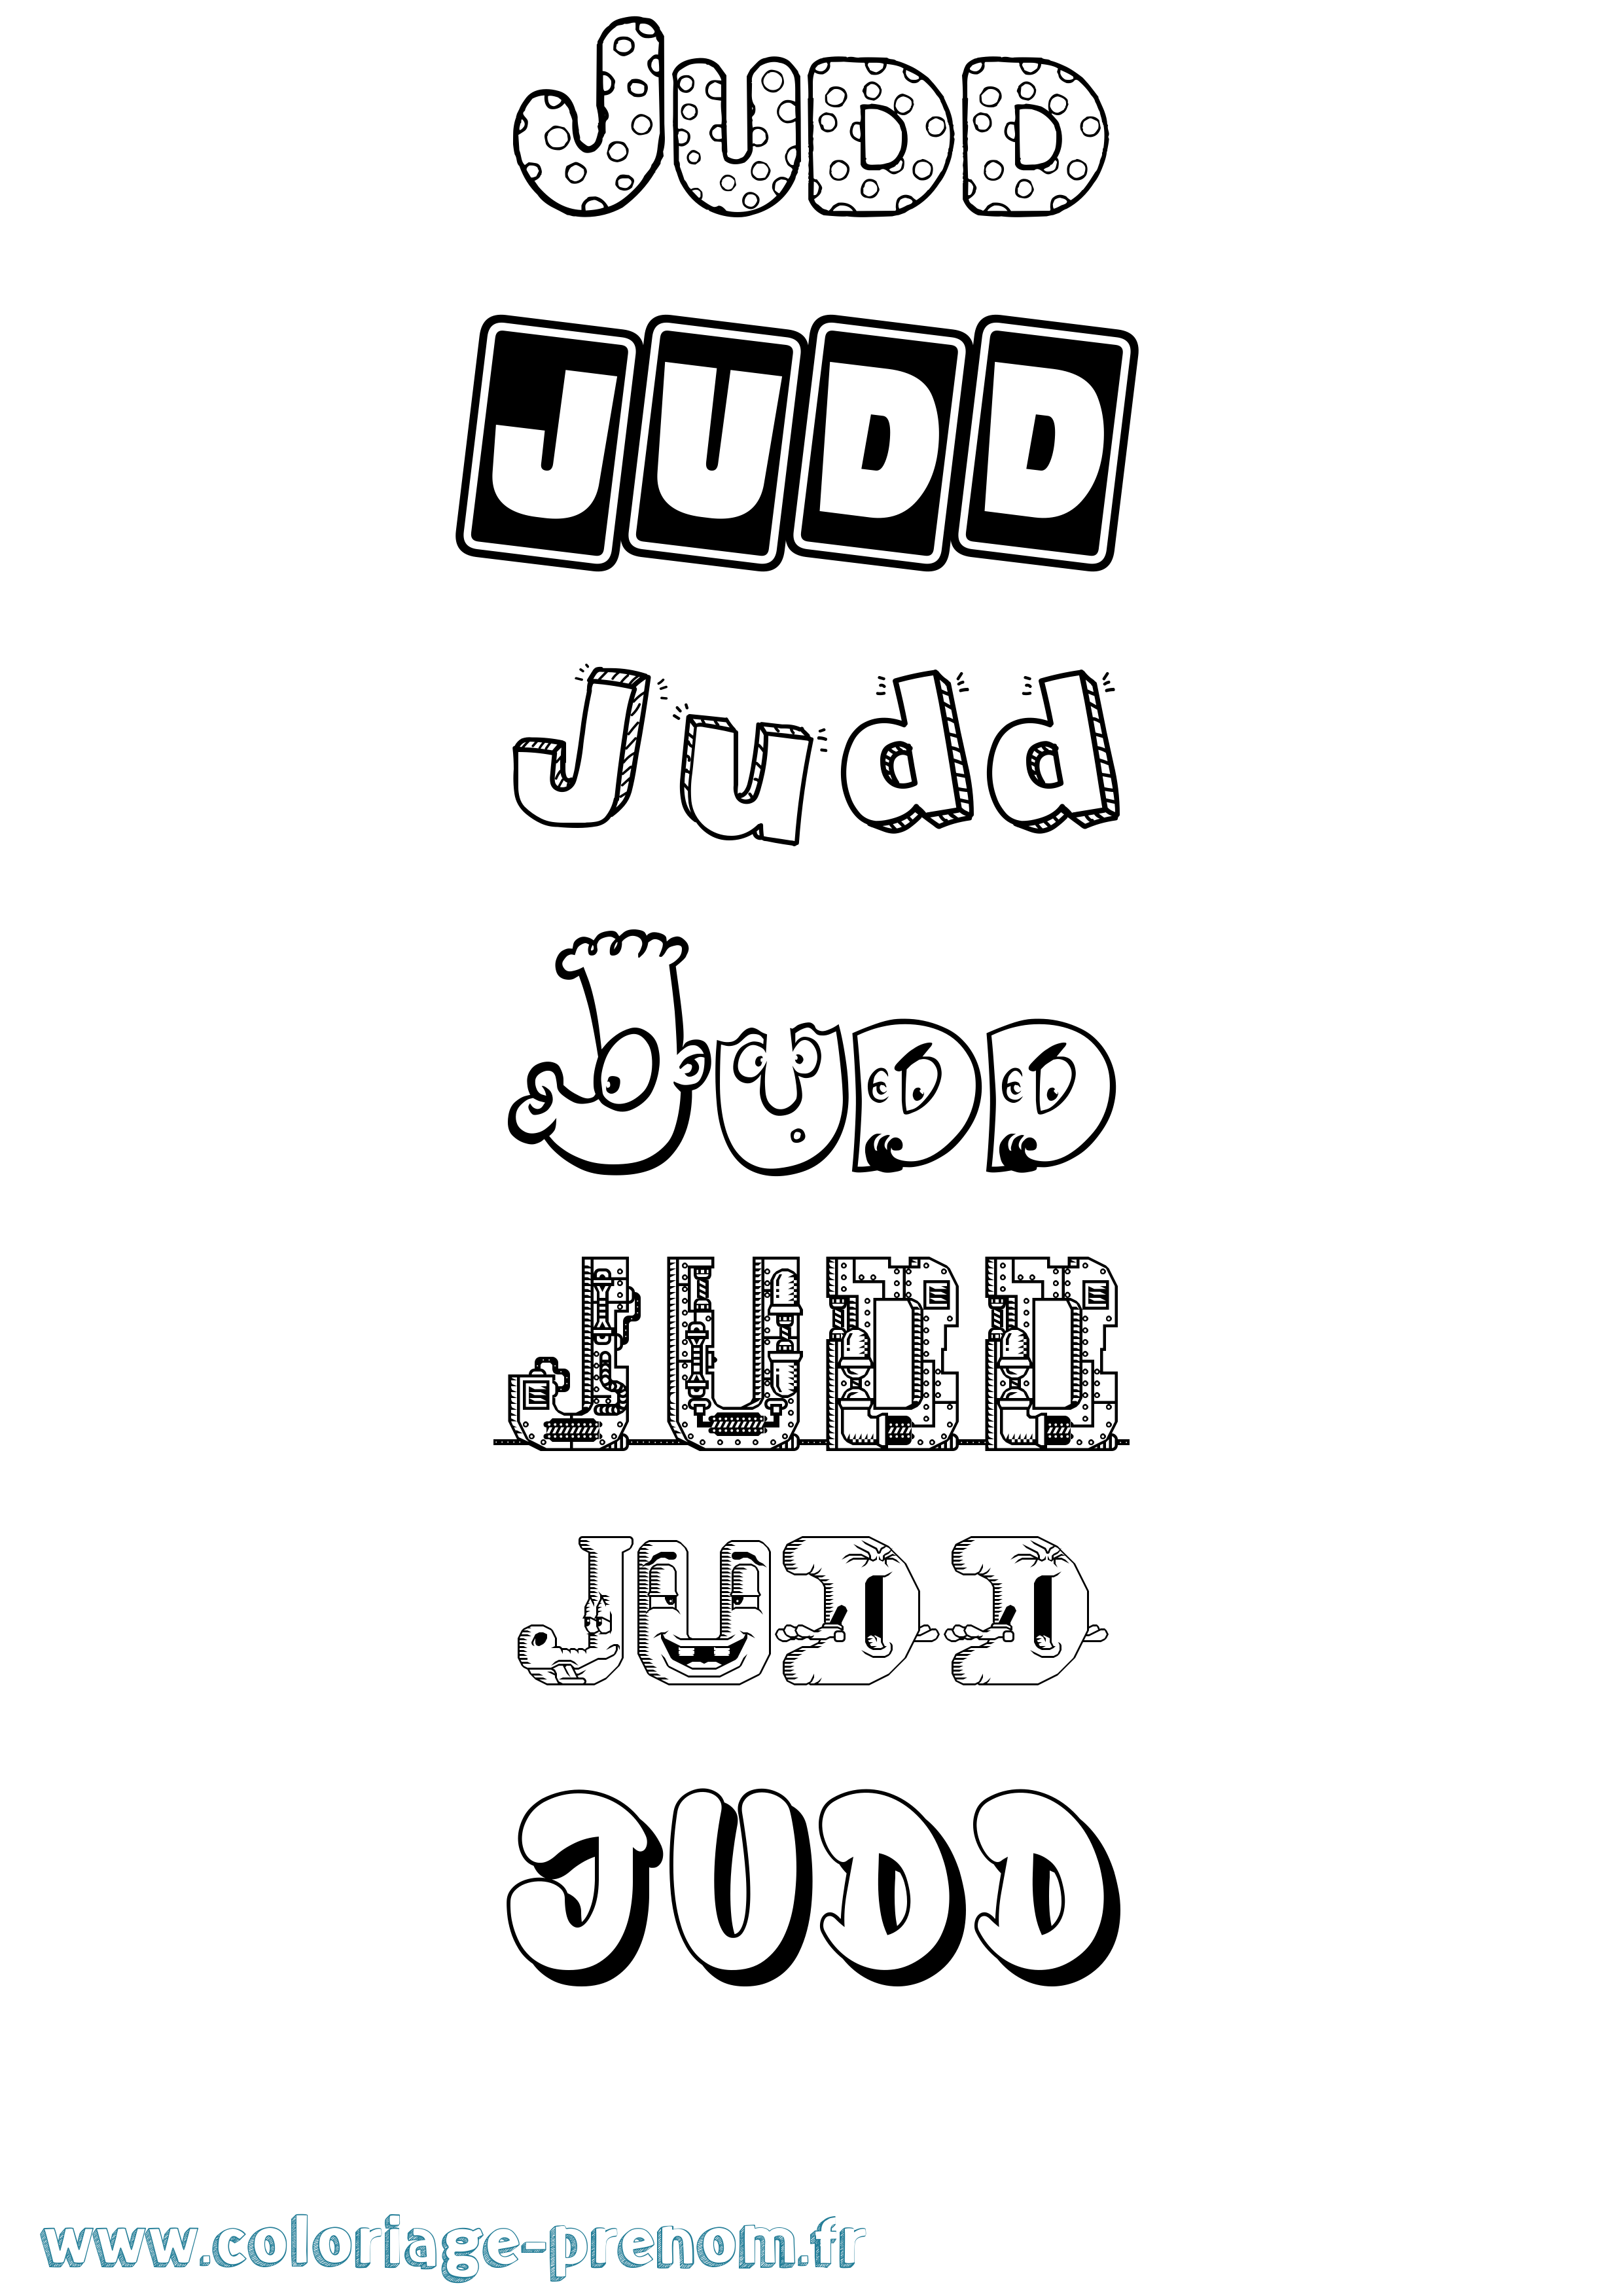 Coloriage prénom Judd Fun